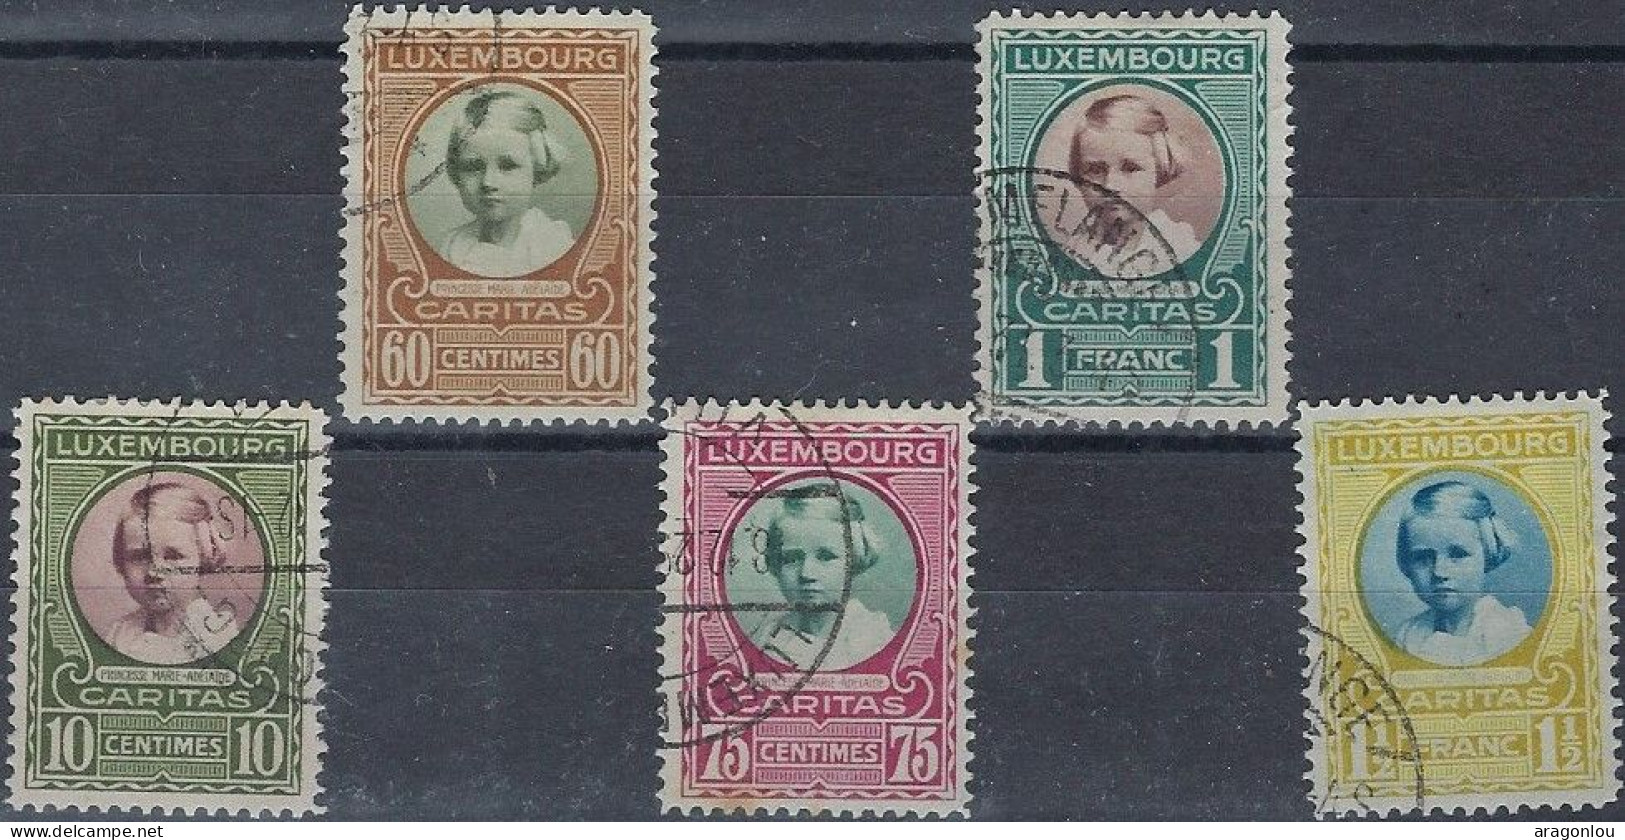 Luxembourg - Luxemburg -  Timbre  Série   1928   °   Marie - Adélaïde    VC. 60,- - Usados